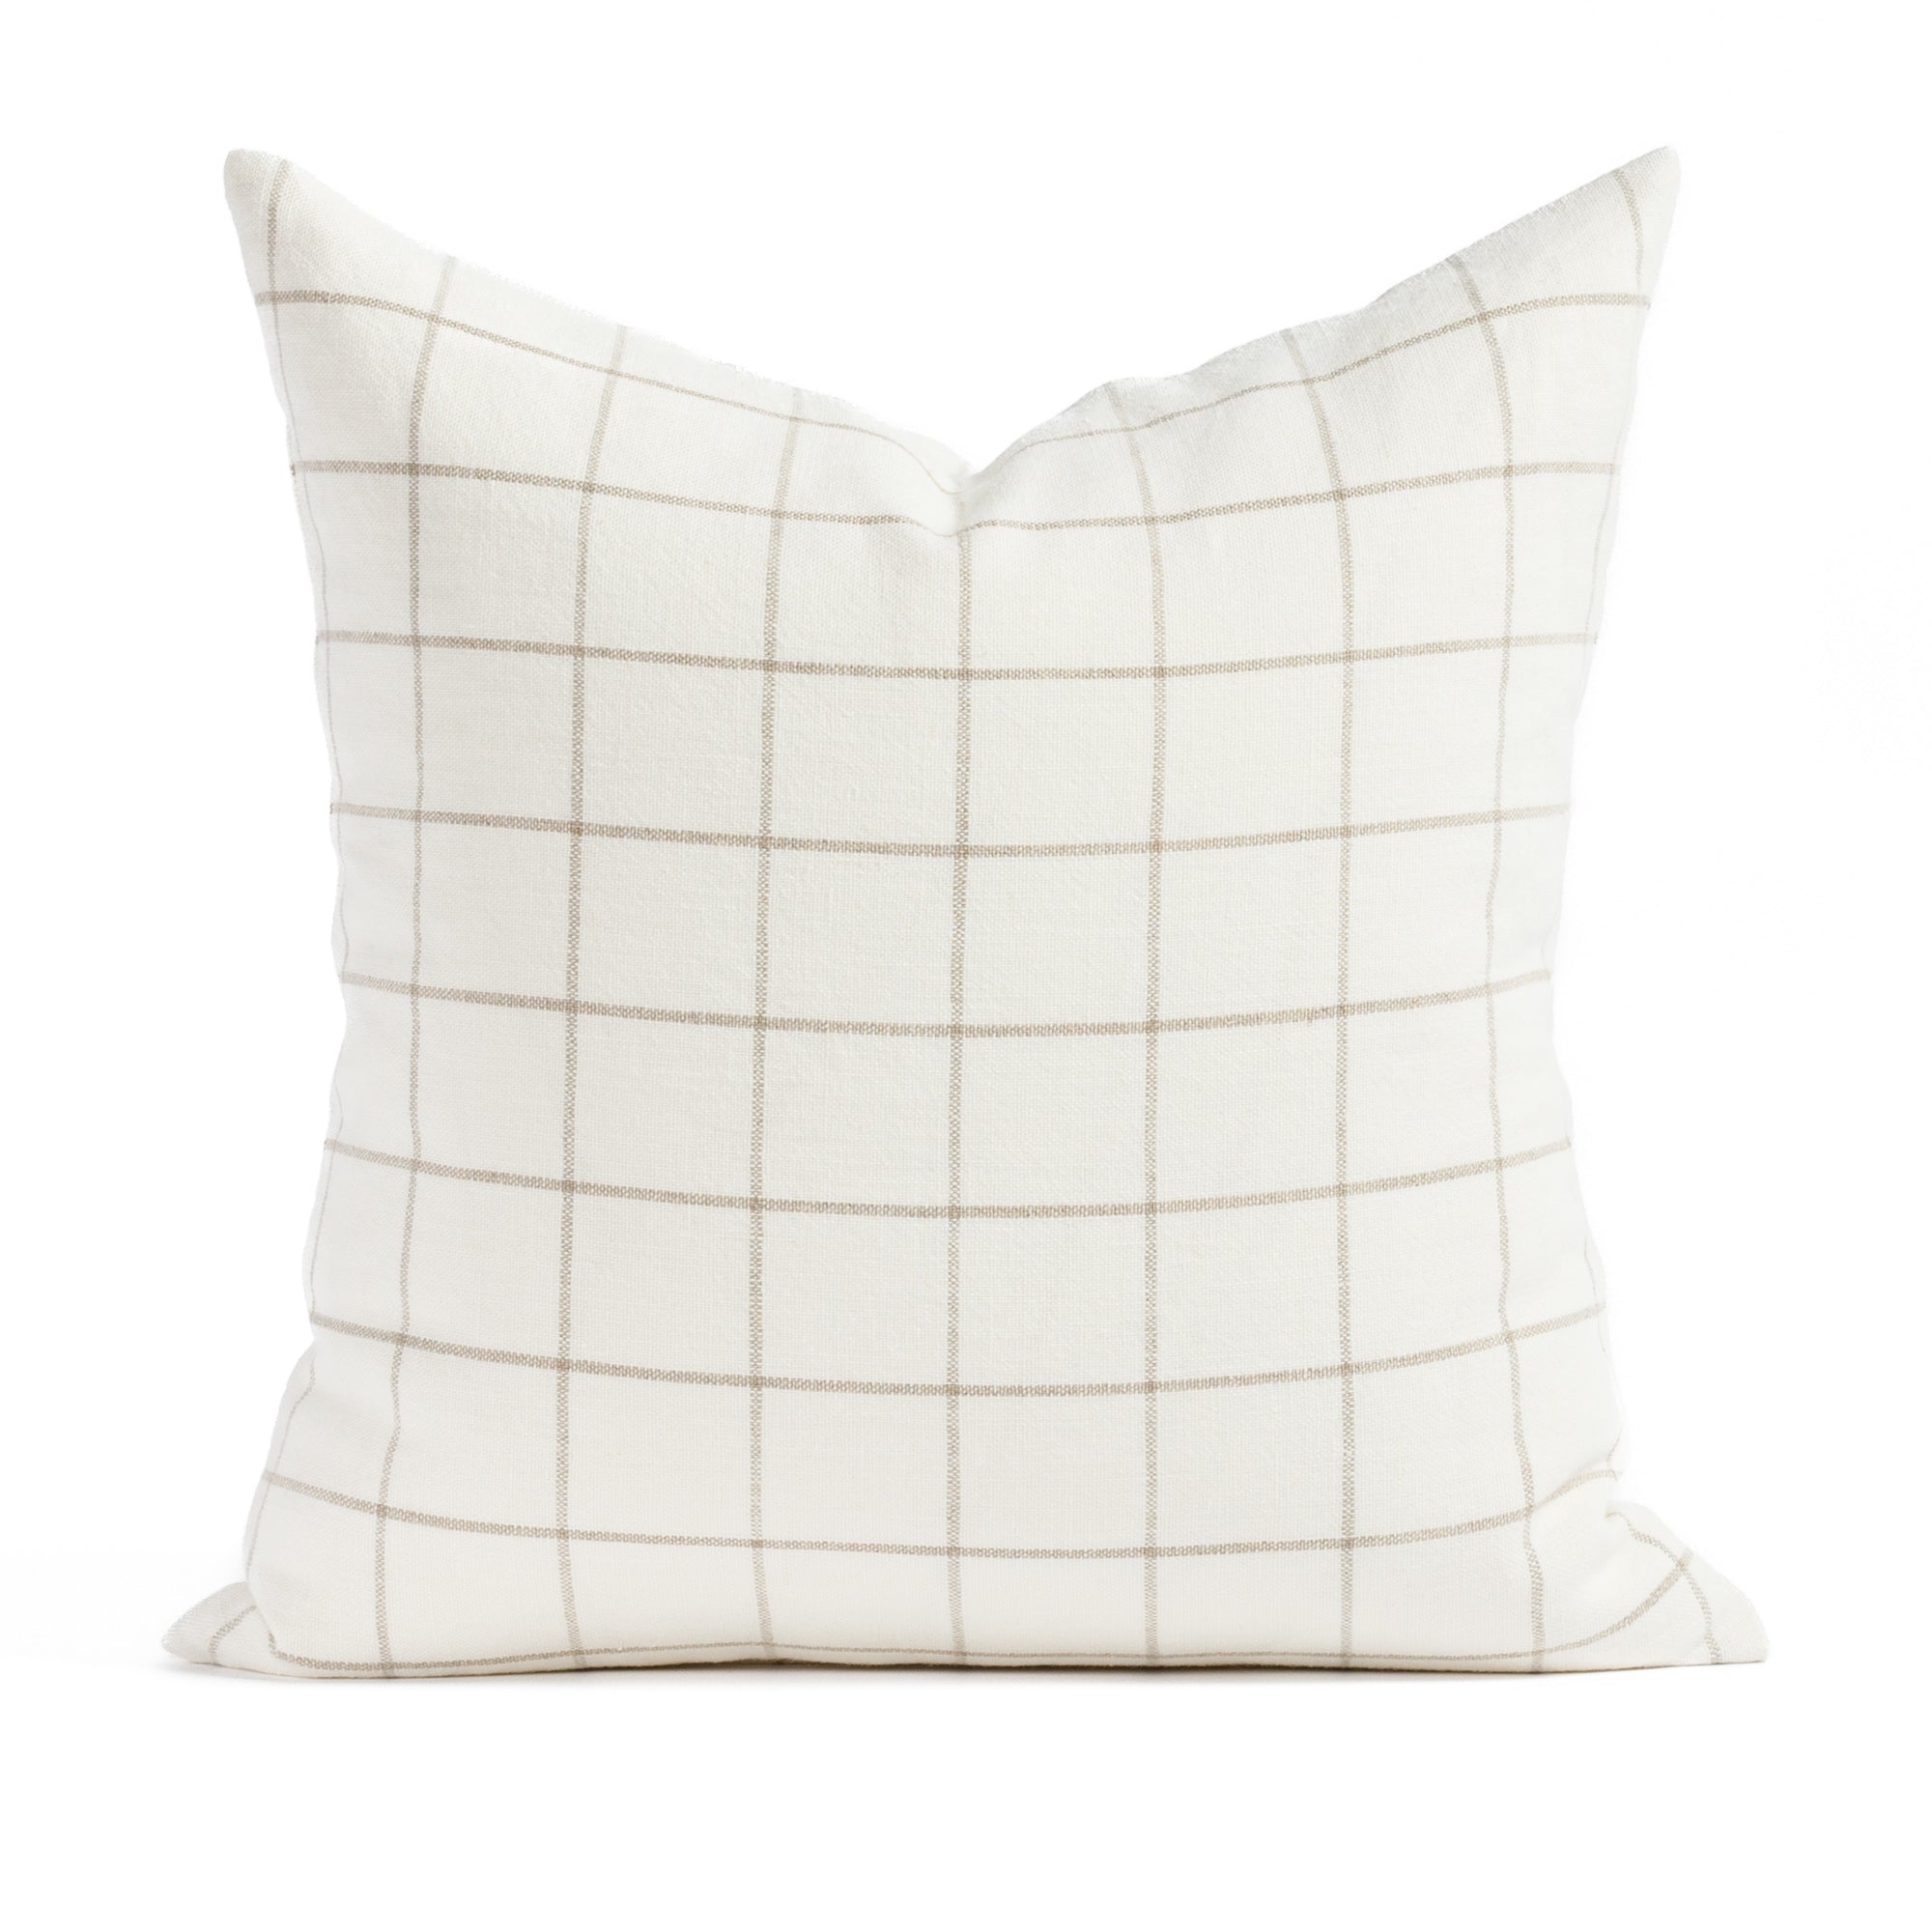 Butler Check 20x20 Natural Cream Pillow, a cream and beige windowpane linen throw pillow from Tonic Living